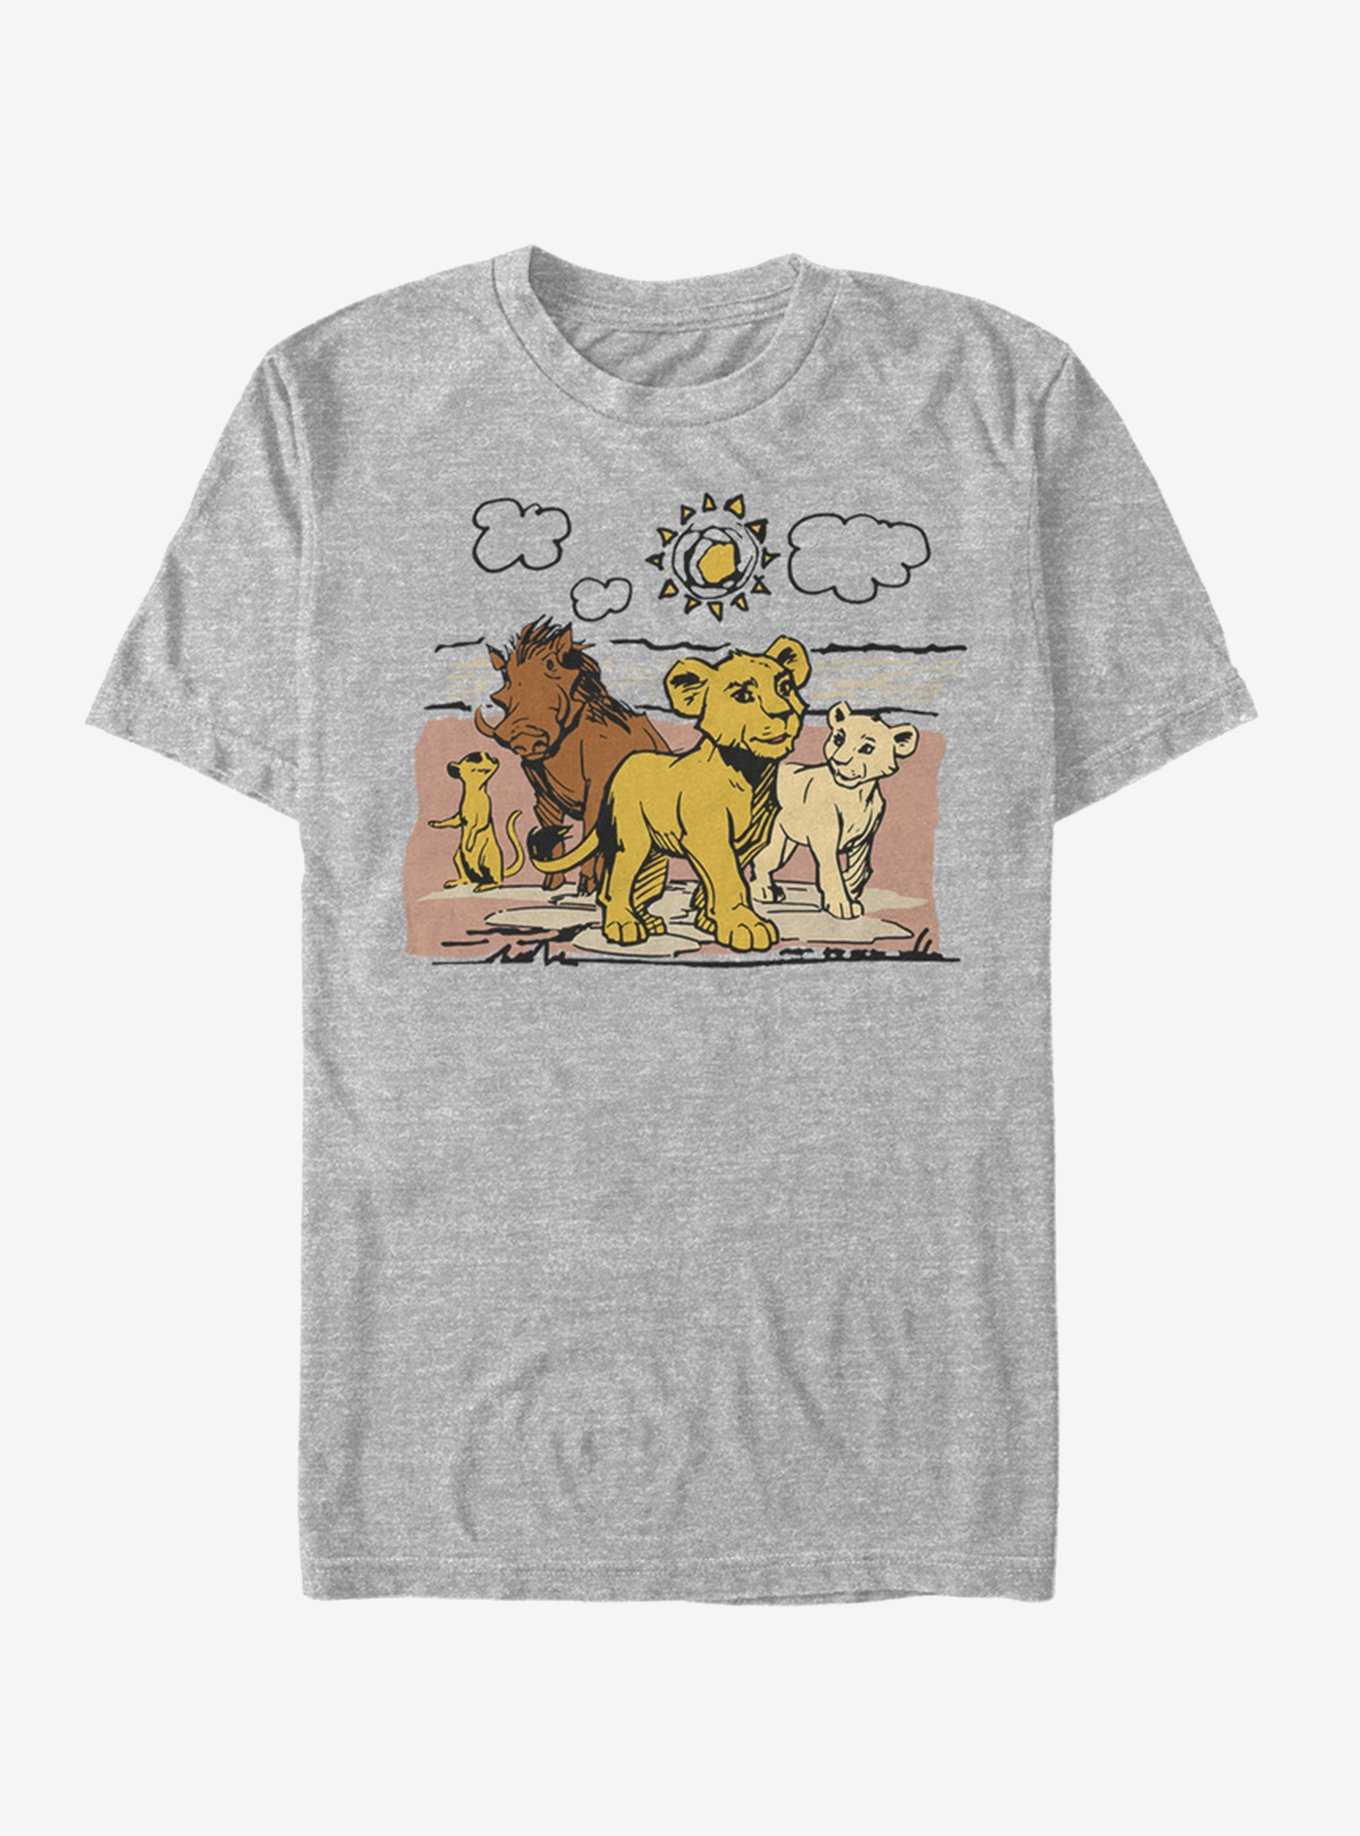 Disney The Lion King 2019 Hakuna Group T-Shirt, , hi-res